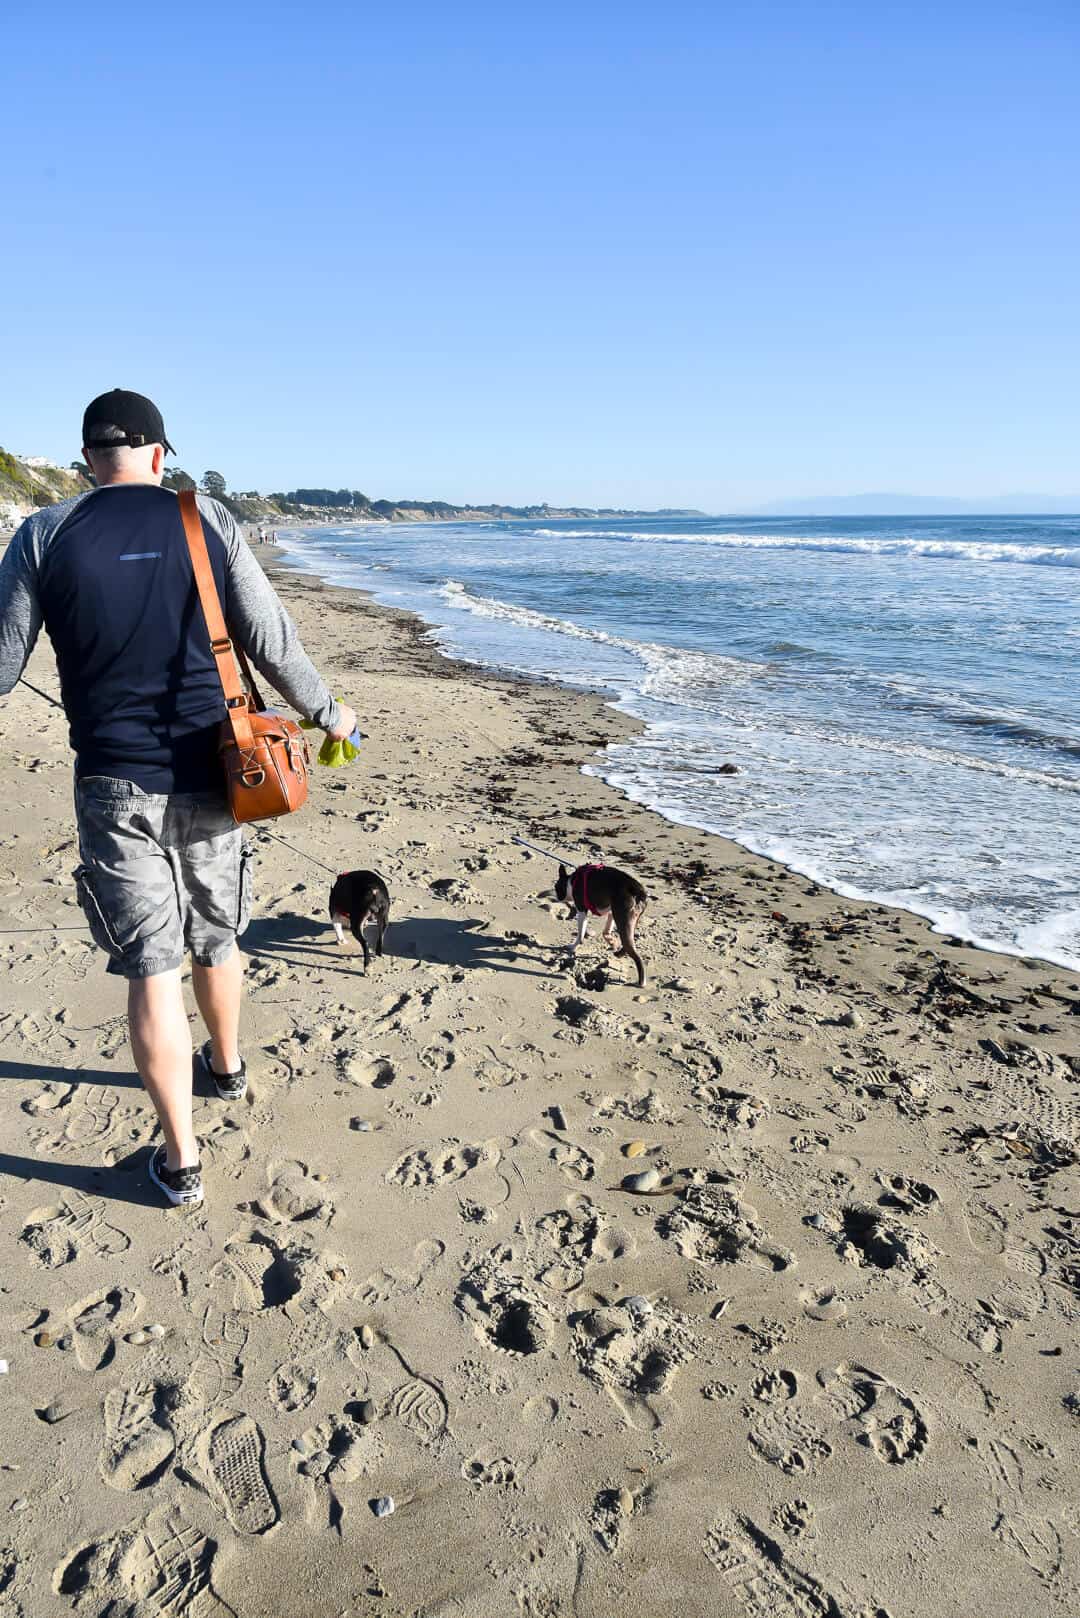 Paul walks the dogs down the beach near the water.